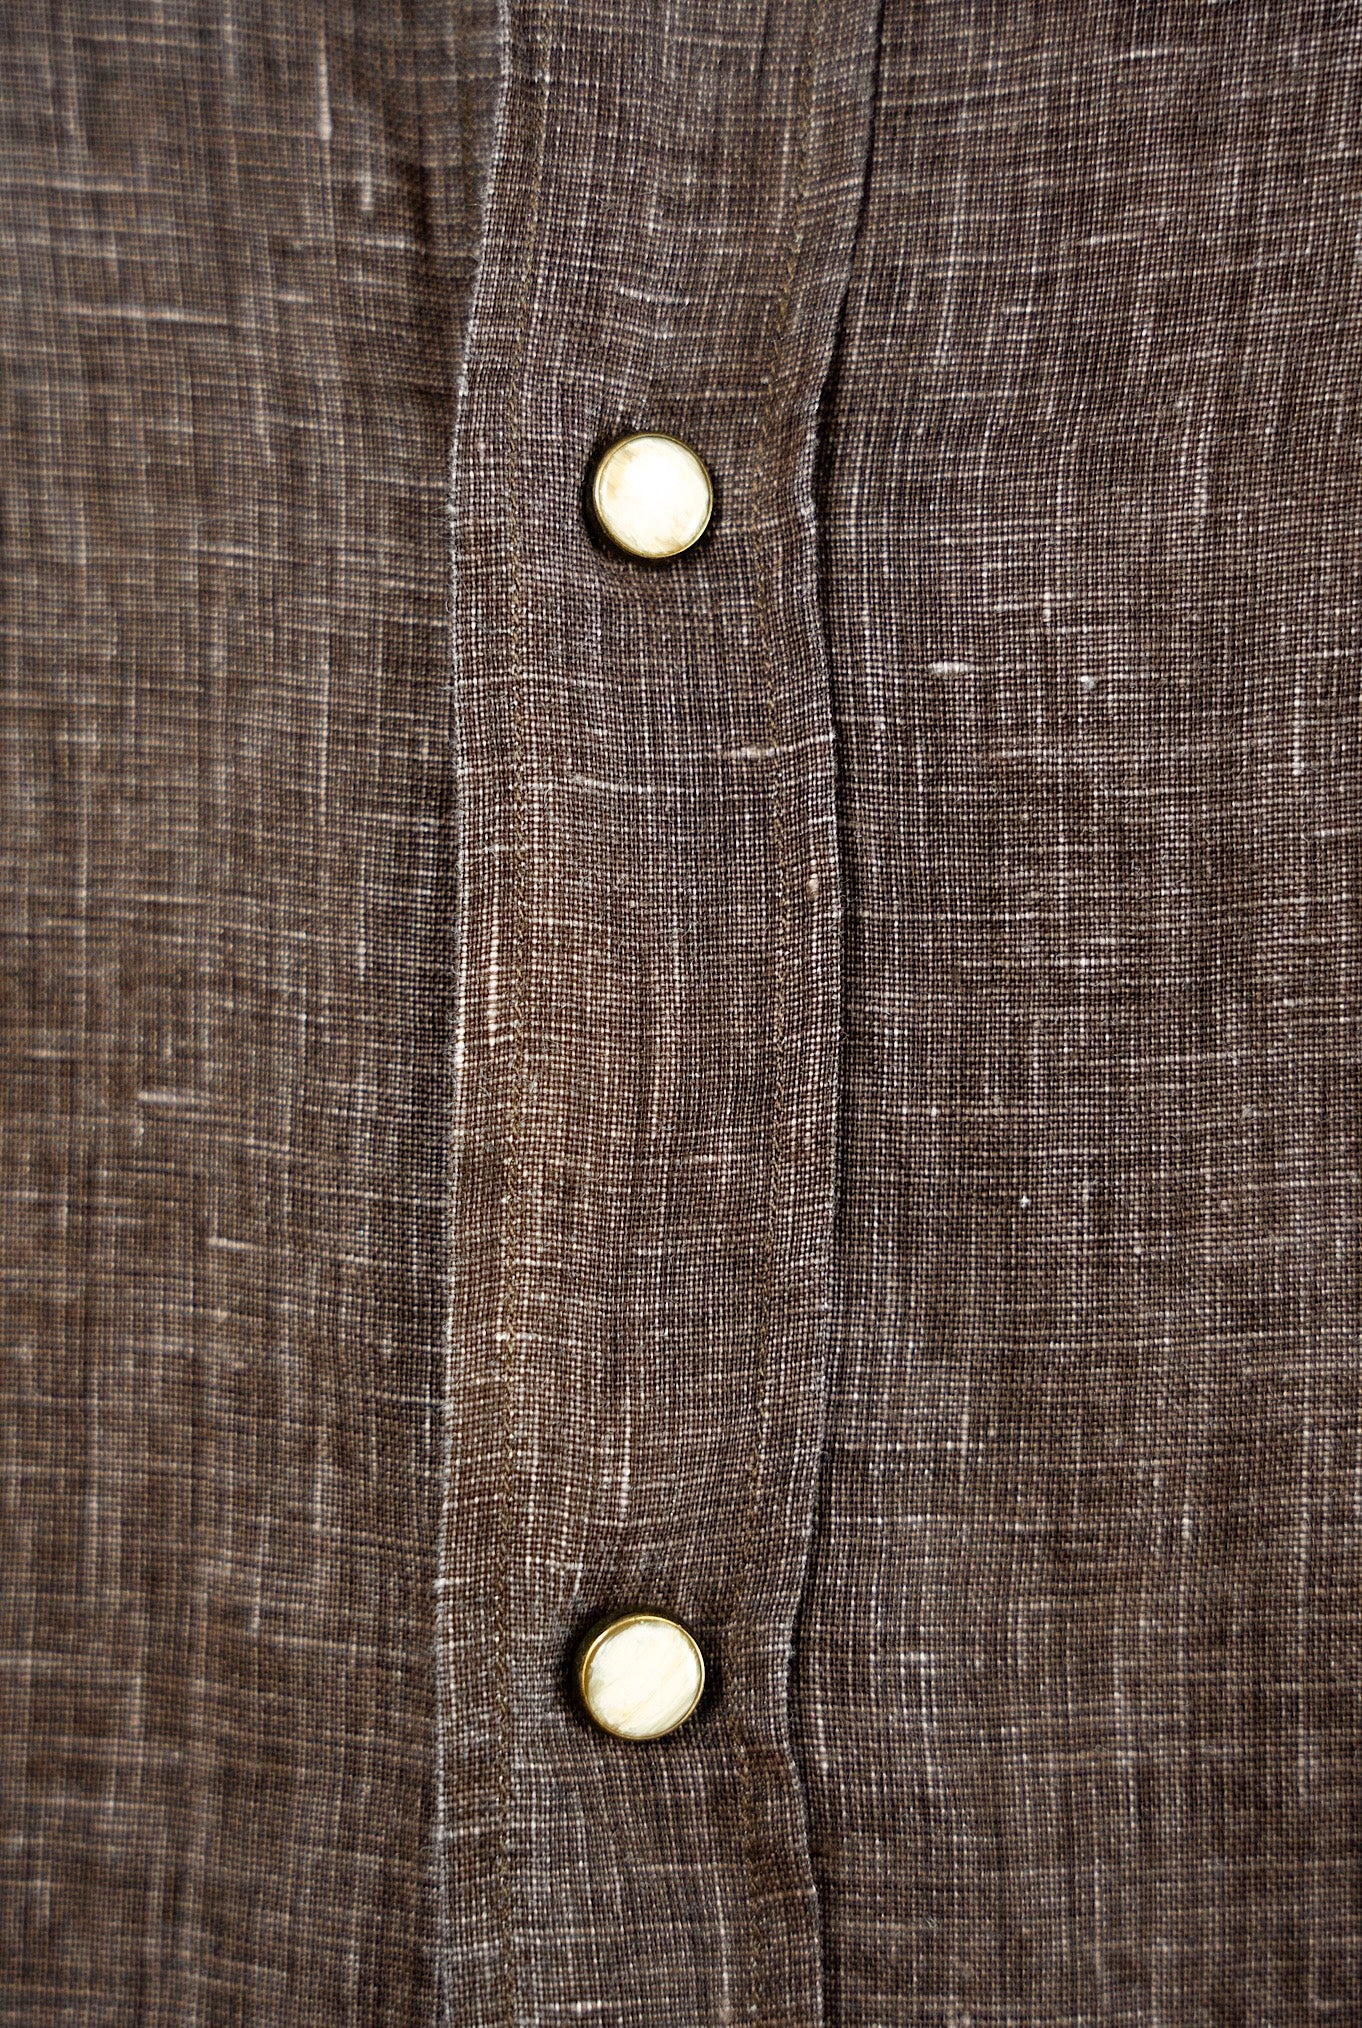 GIANNETTO PORTOFINO SLIM FIT Brown Linen Shirt